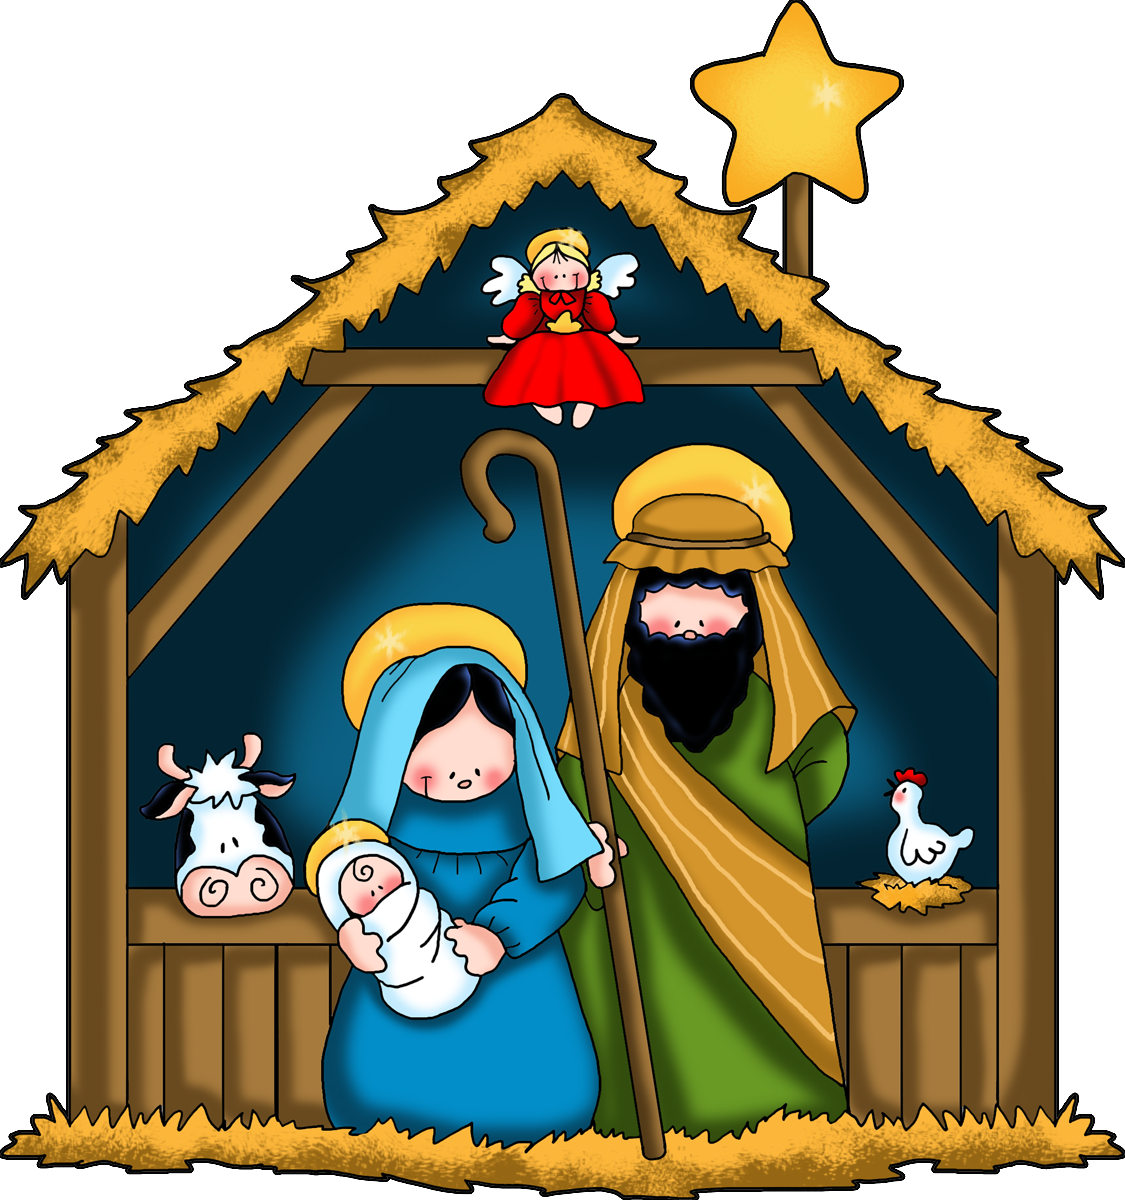 nativity scene images - www. - ClipArt Best - ClipArt Best